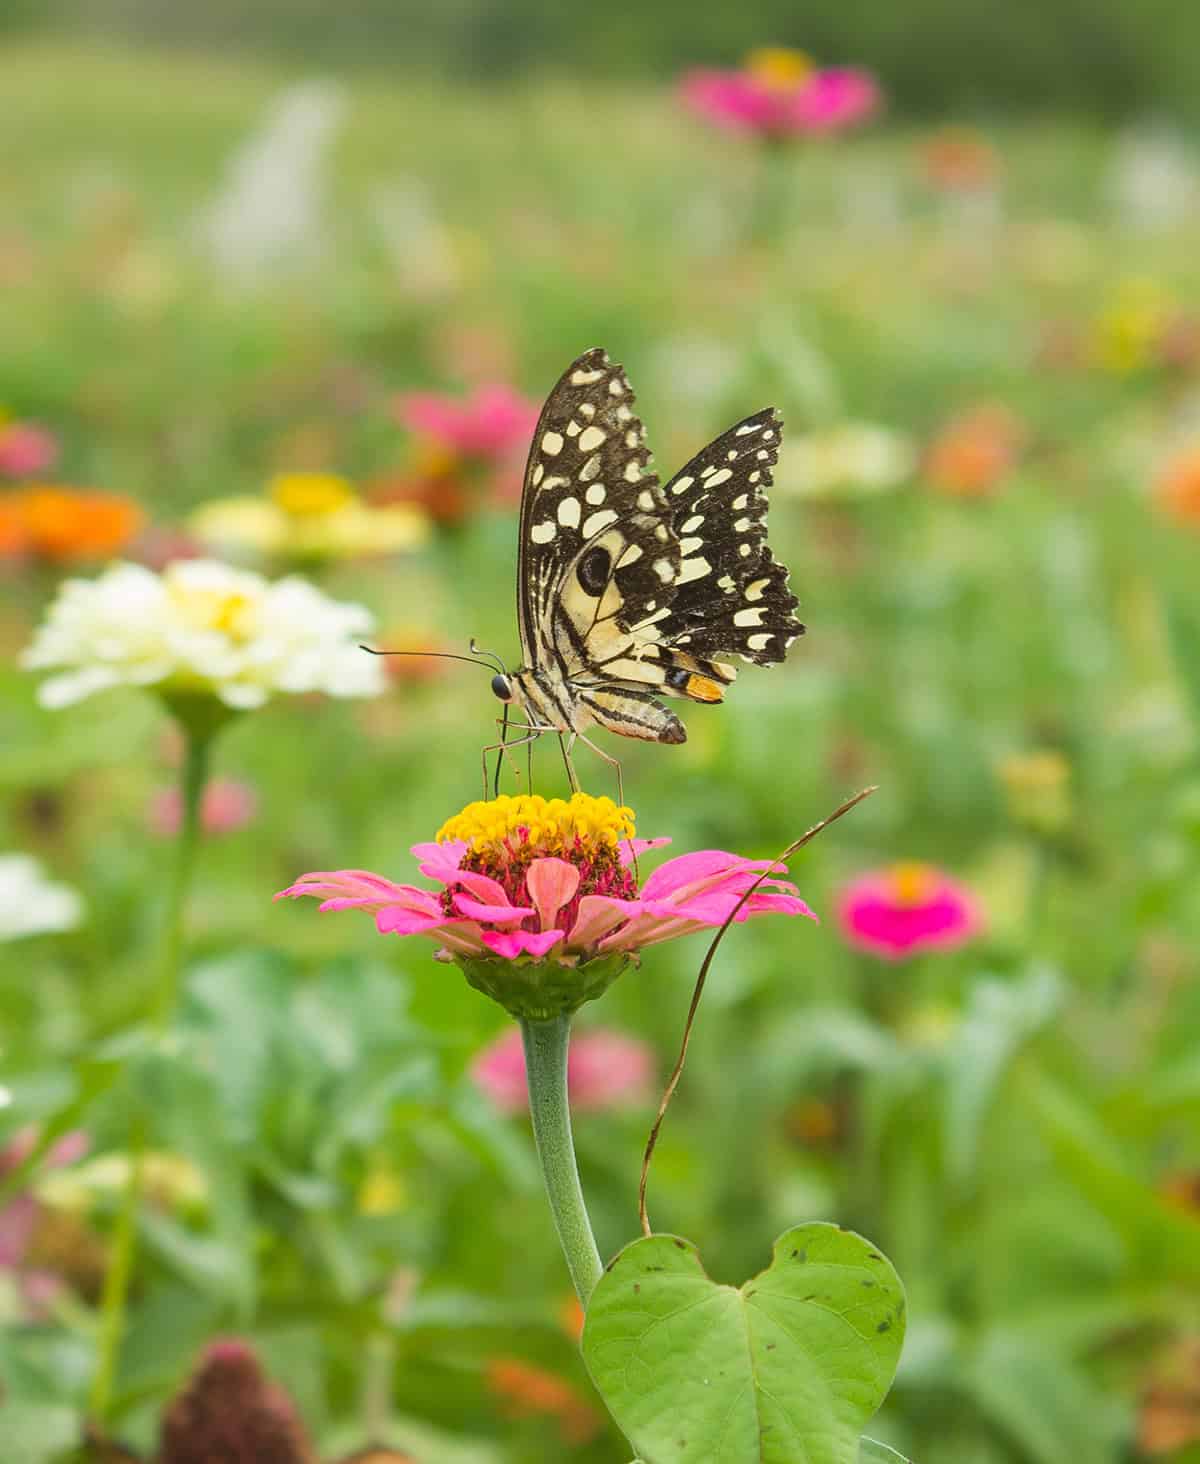 Plant a Butterfly Garden